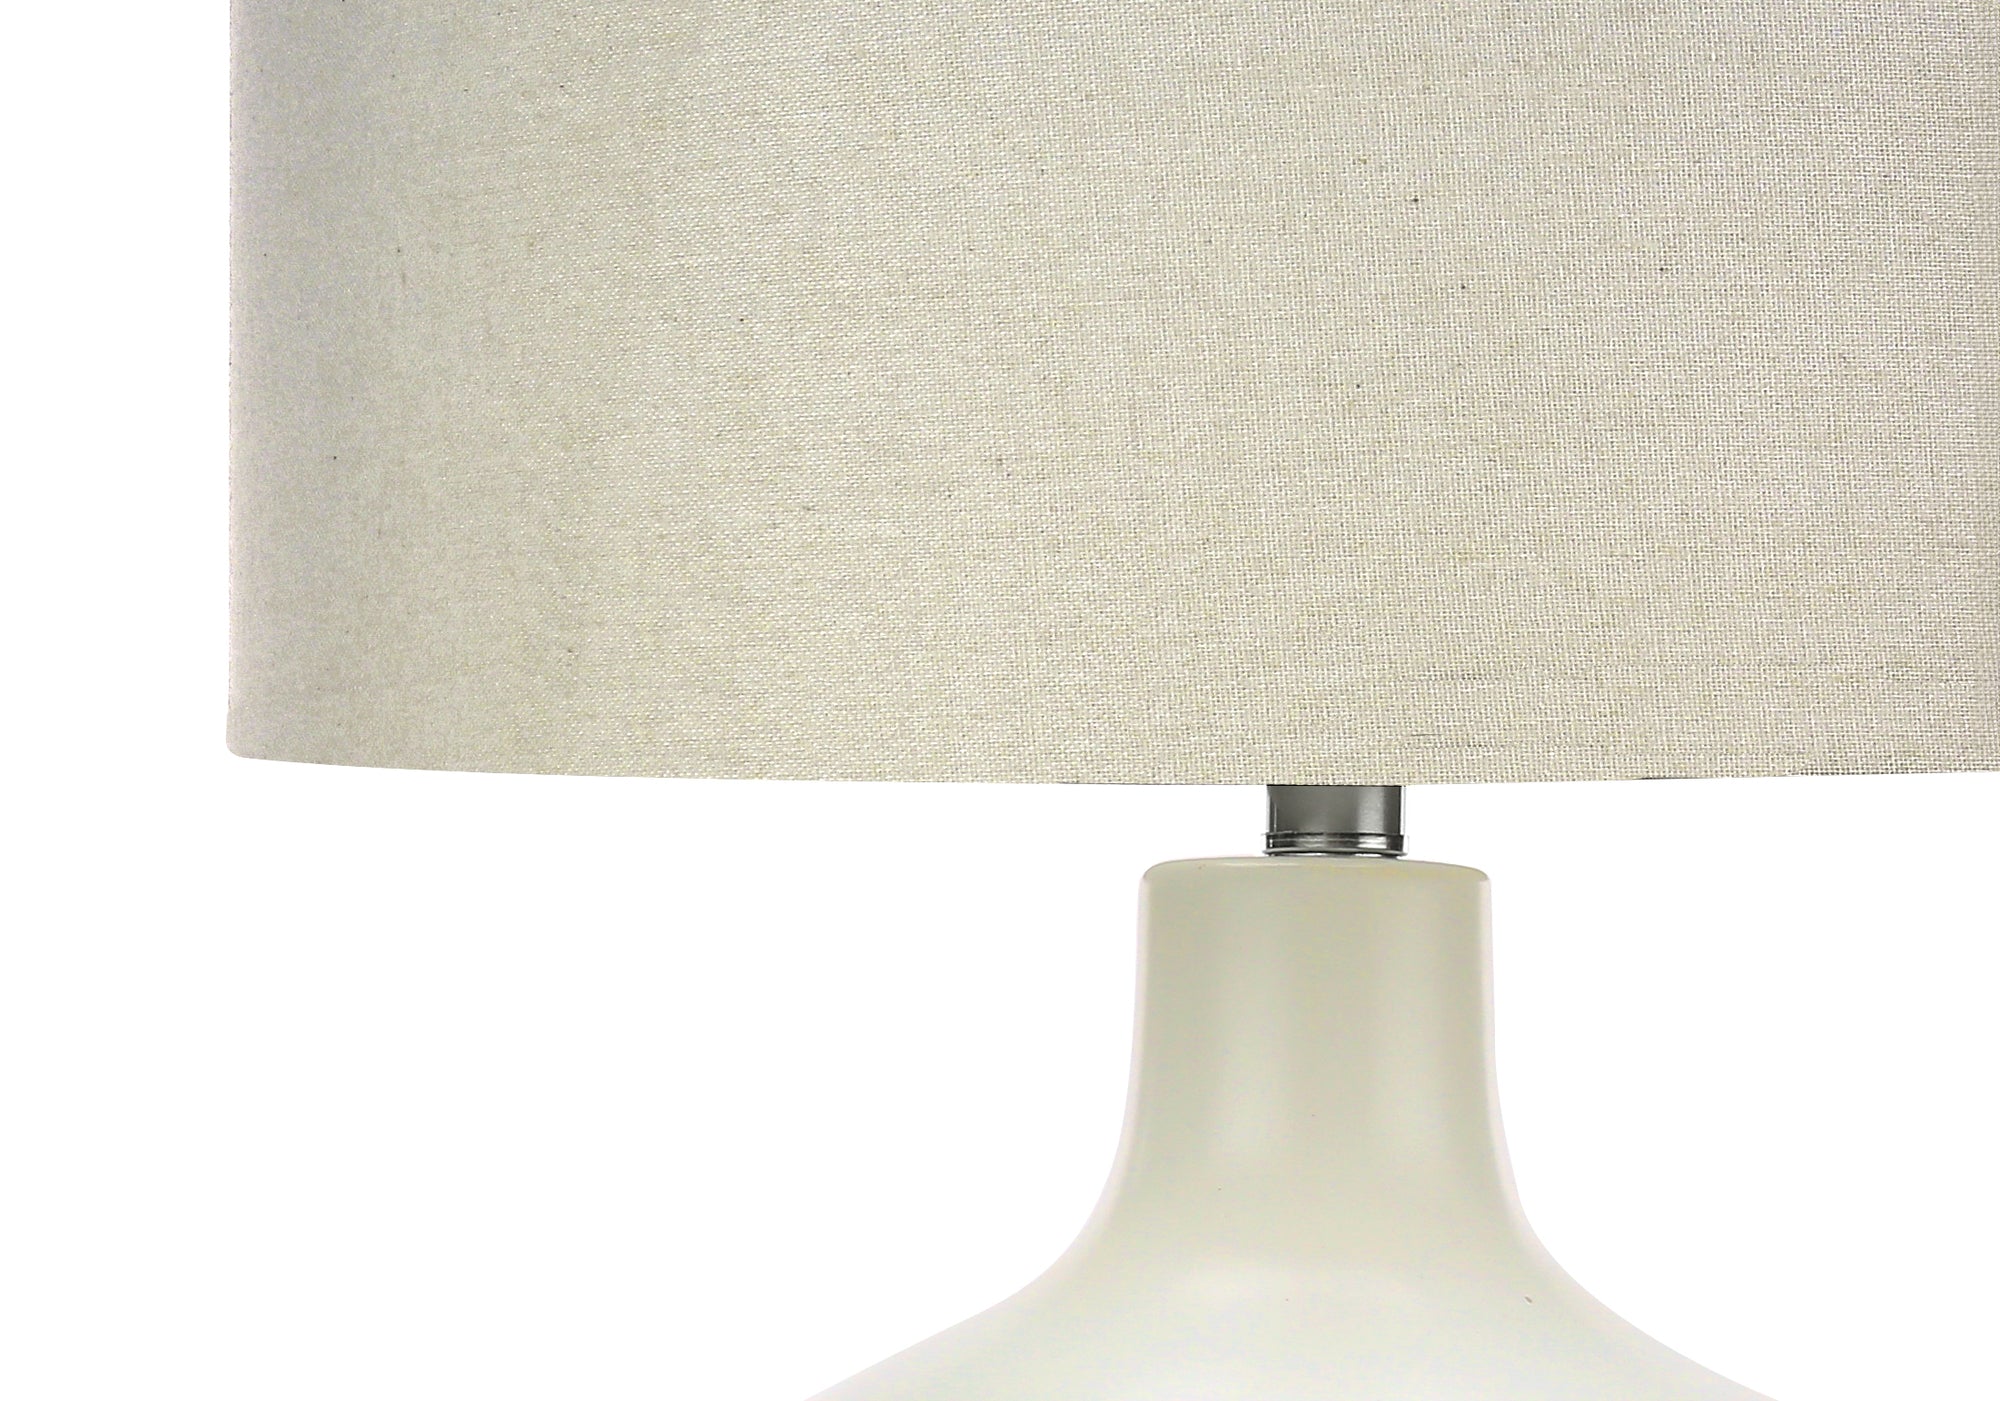 MN-839608    Lighting, 25"H, Table Lamp, Ivory / Cream Shade, Cream Ceramic, Contemporary